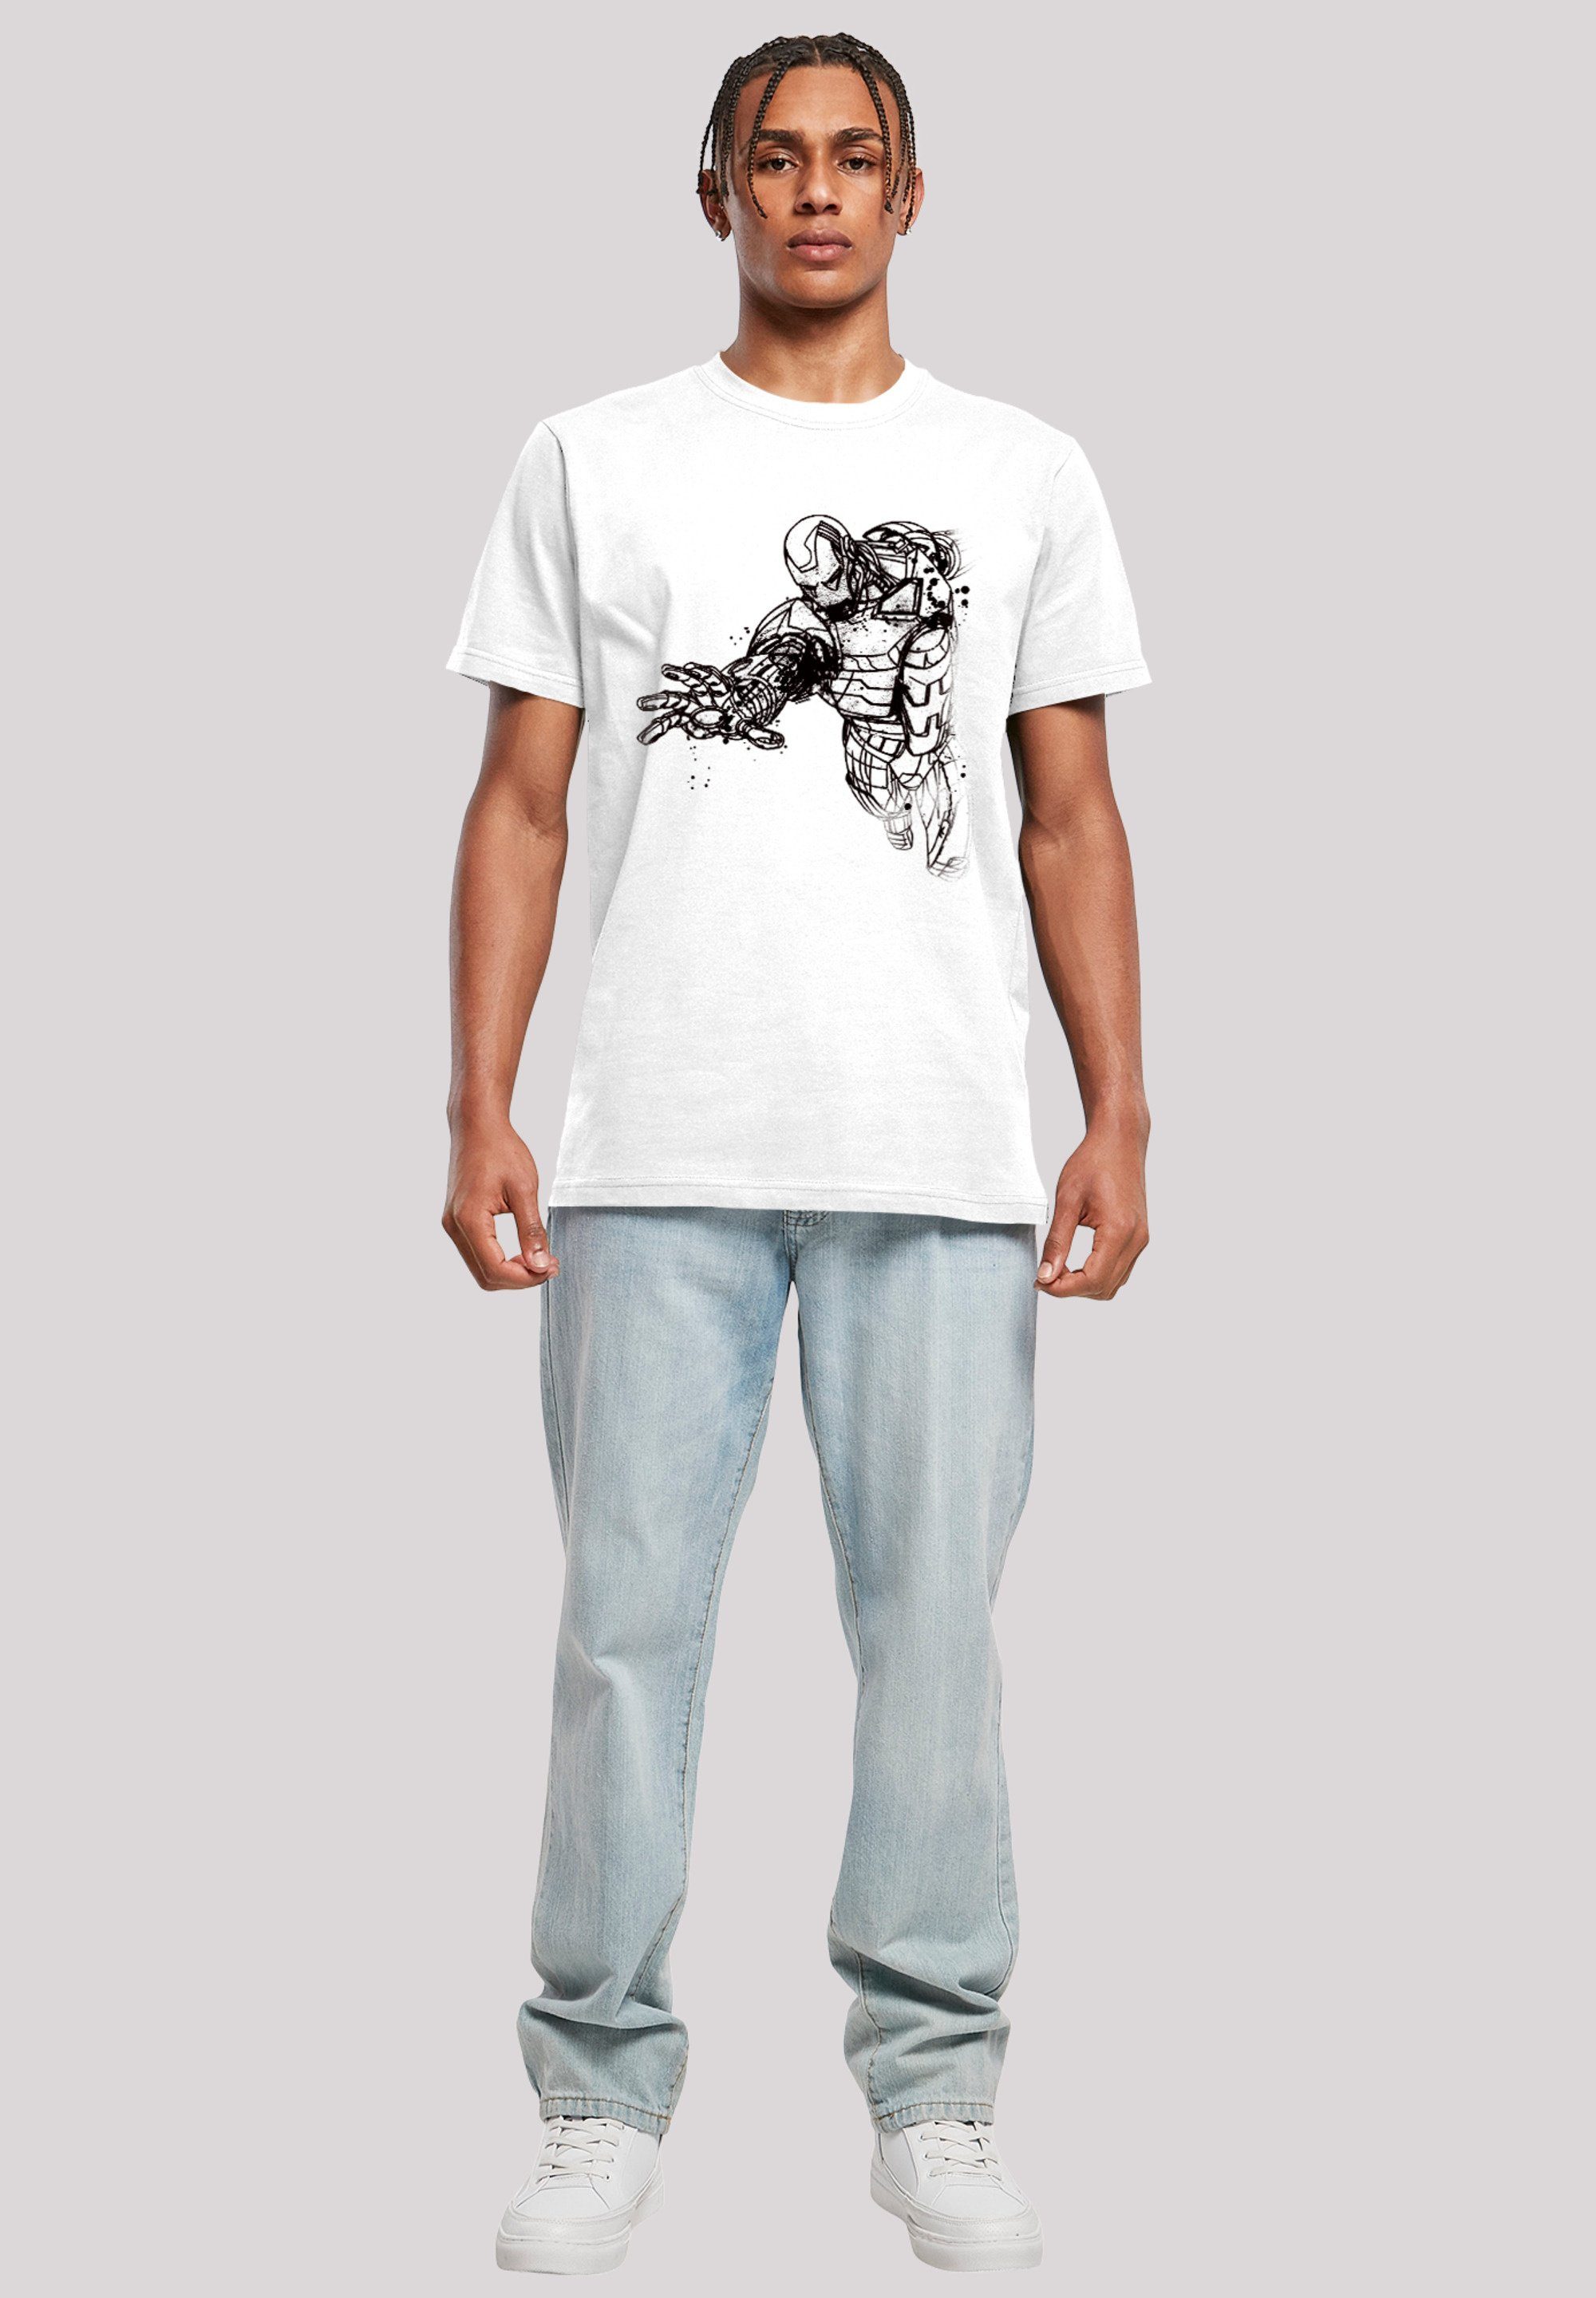 Mono Line' 'Marvel T-Shirt F4NT4STIC Avengers Print Man Iron